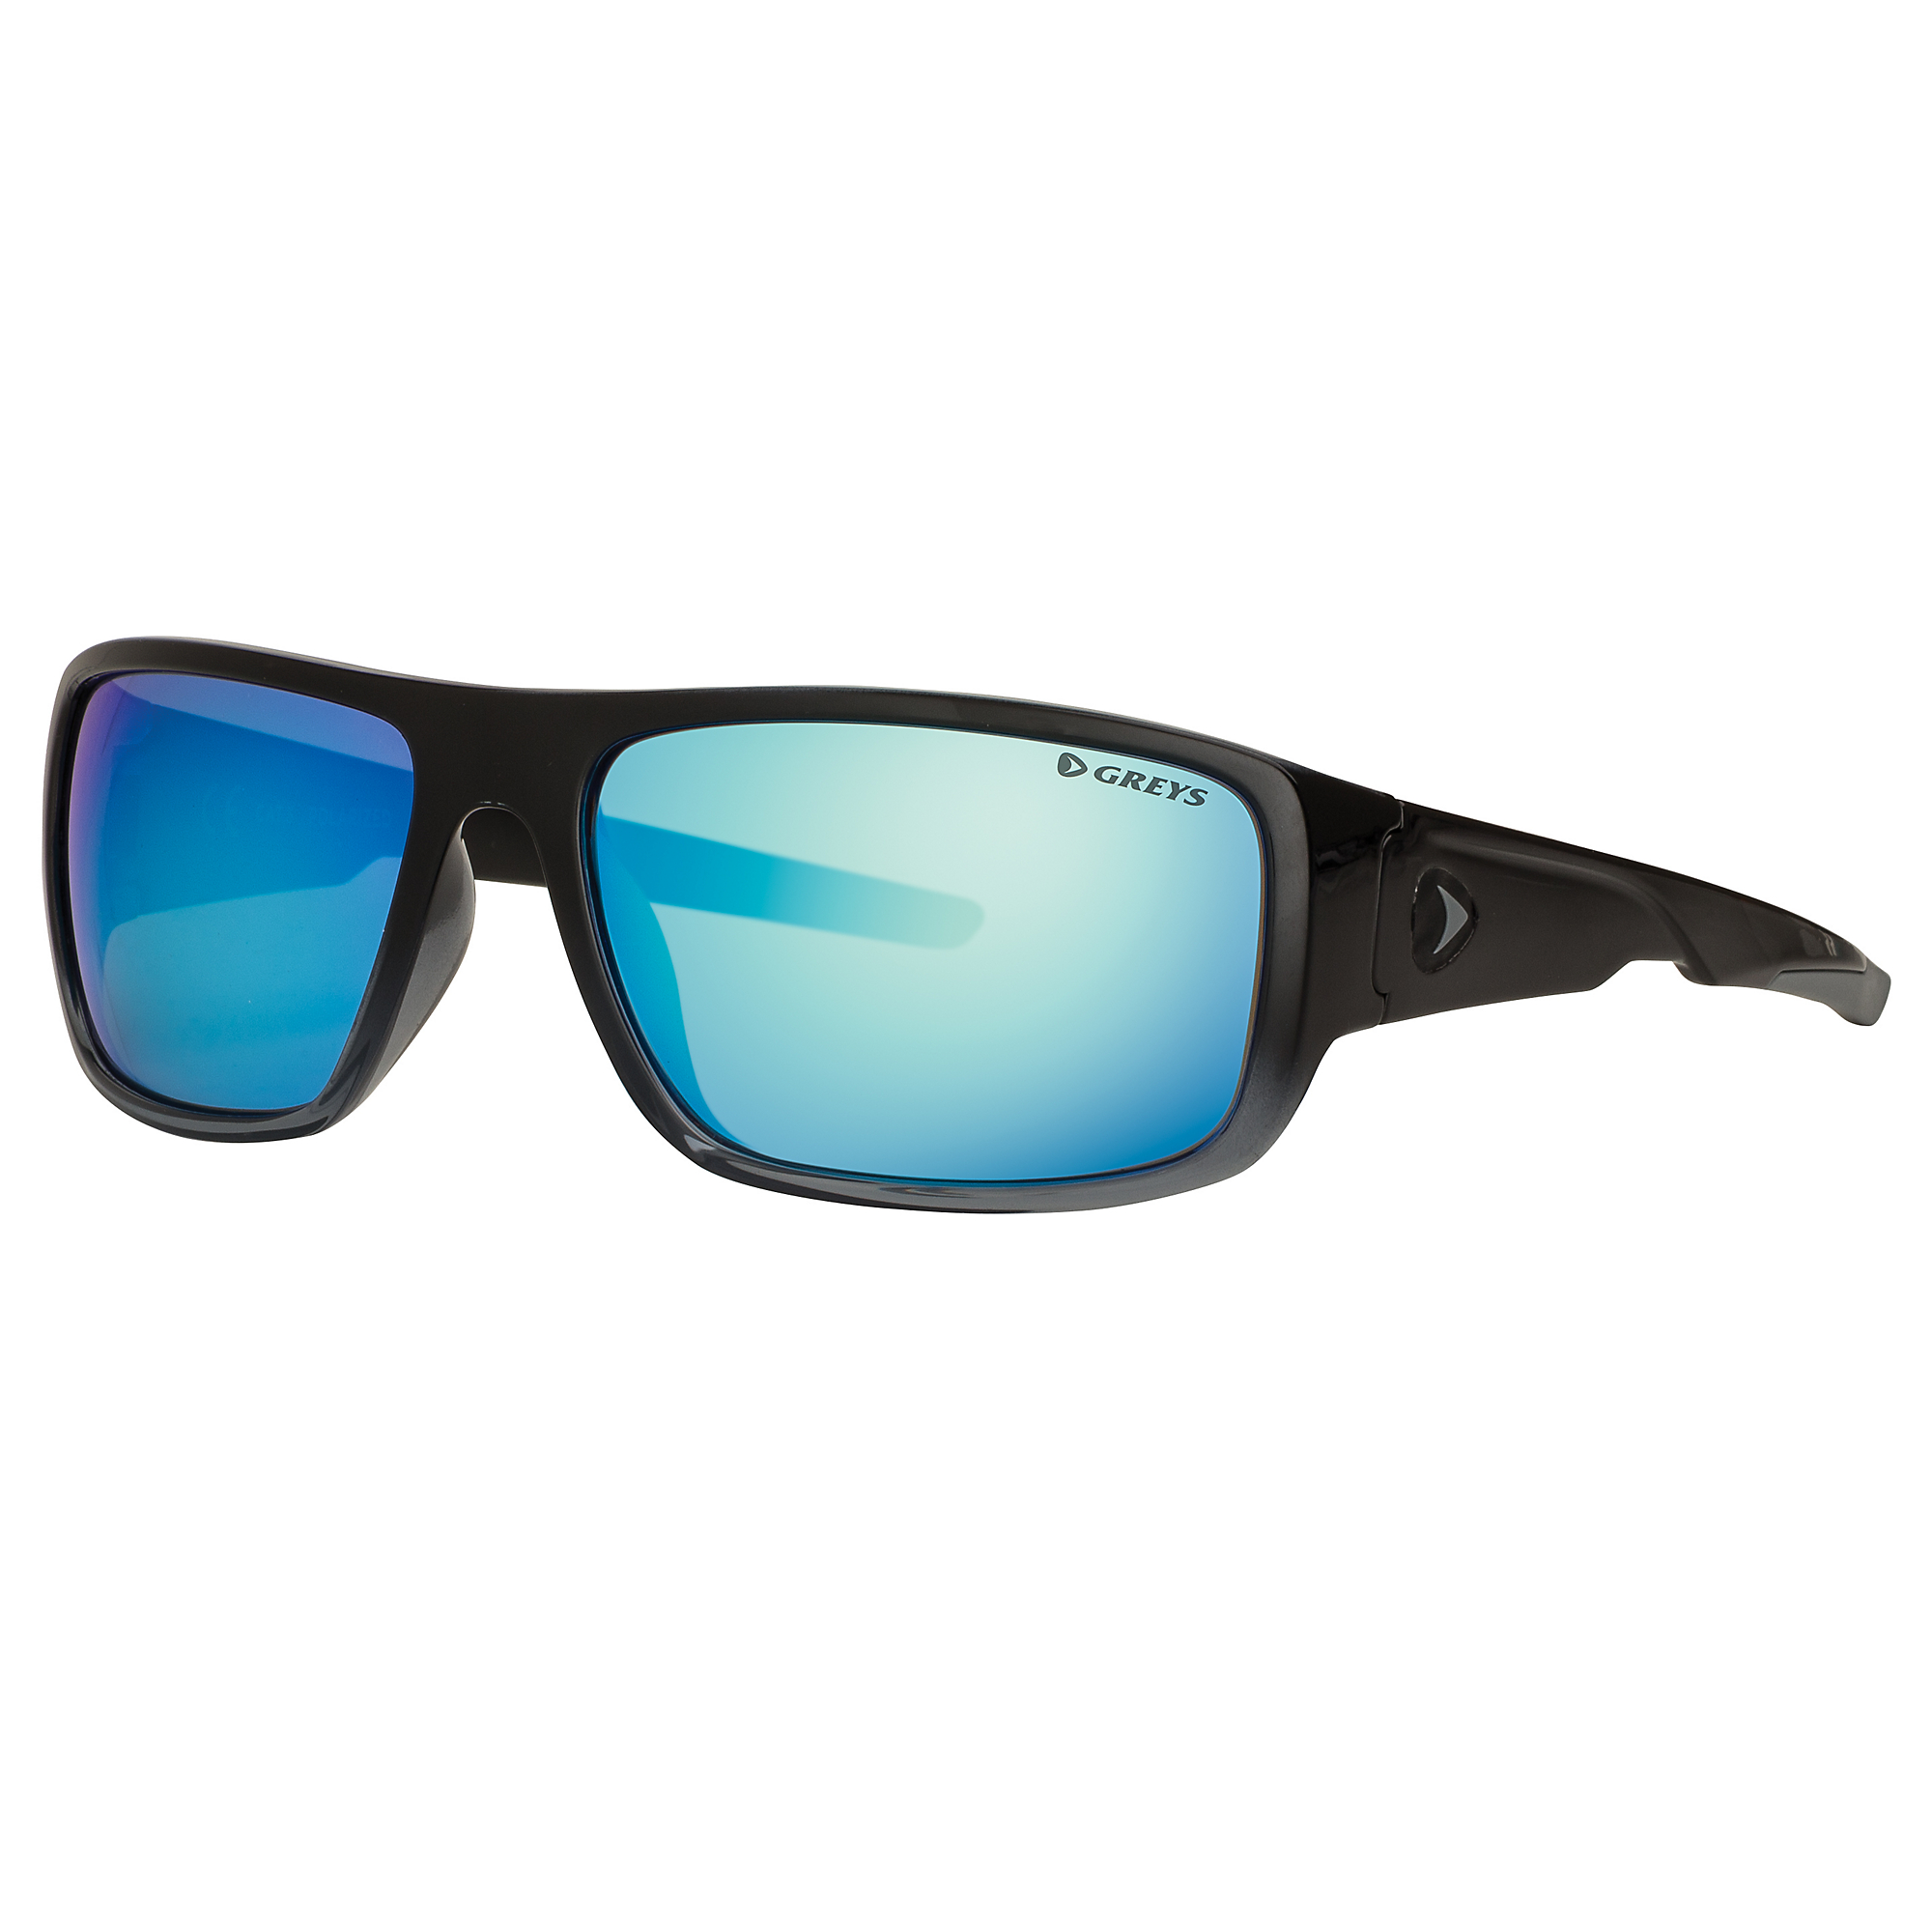 Greys G2 Sunglasses  (Gloss Black Fade/Blue Mirror) 1443835.jpg